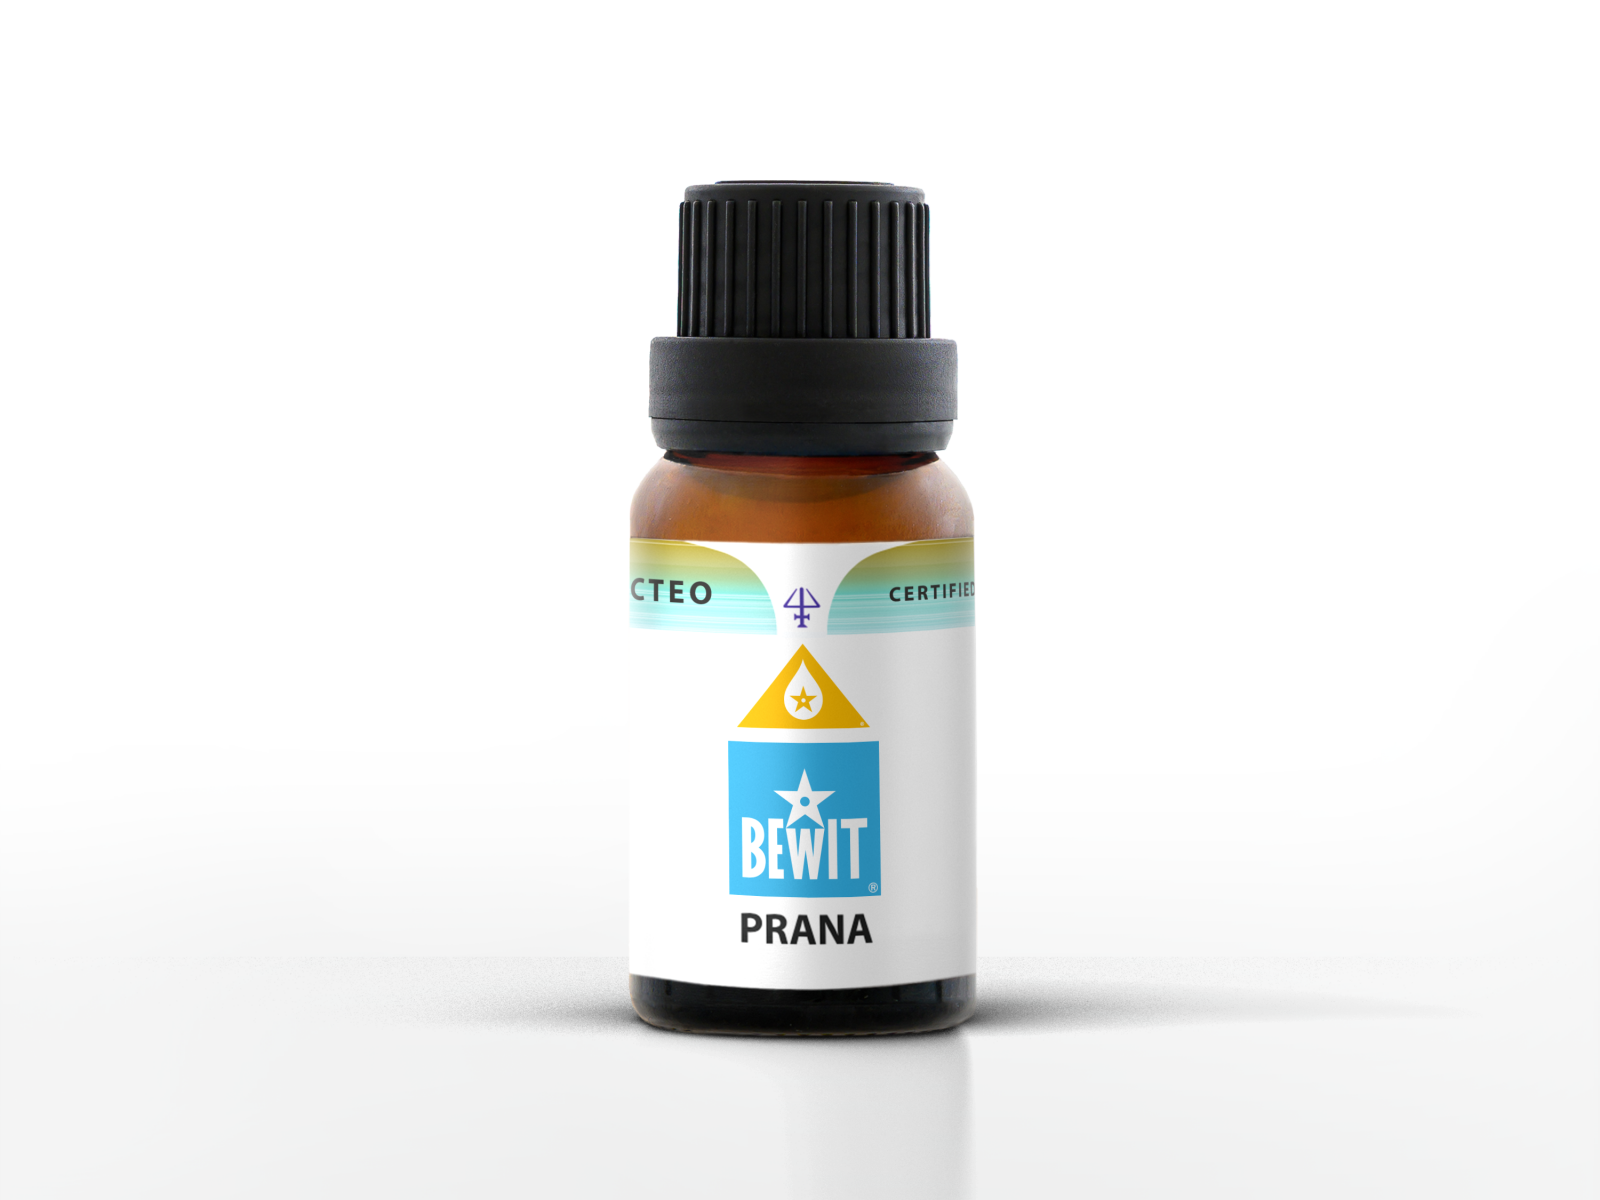 BEWIT PRANA - Blend of essential oils